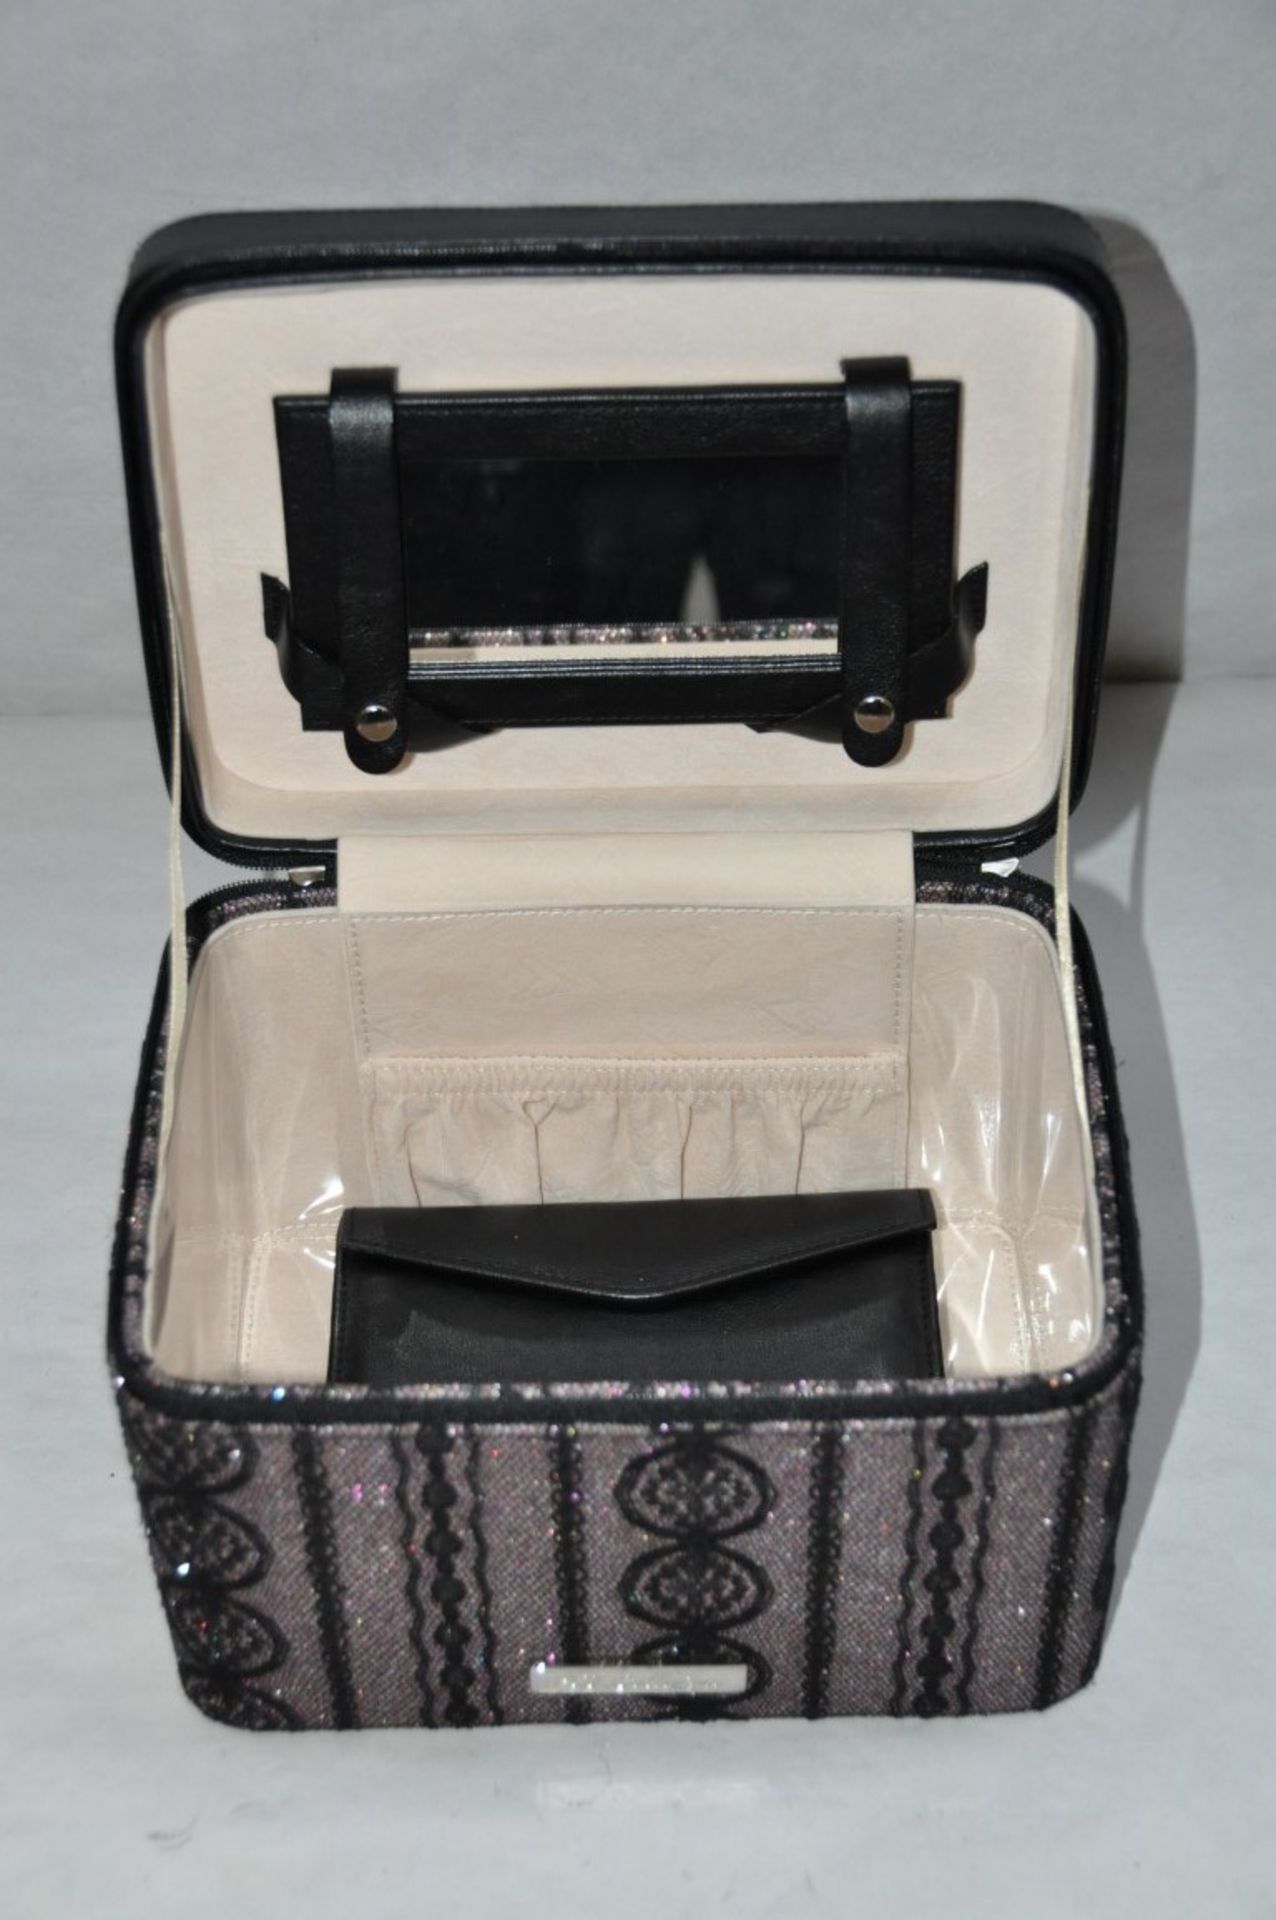 1 x "AB Collezioni" Italian Luxury Jewellery Box (31481N) - Ref LT089 – Includes Separate Vanity Set - Image 3 of 5